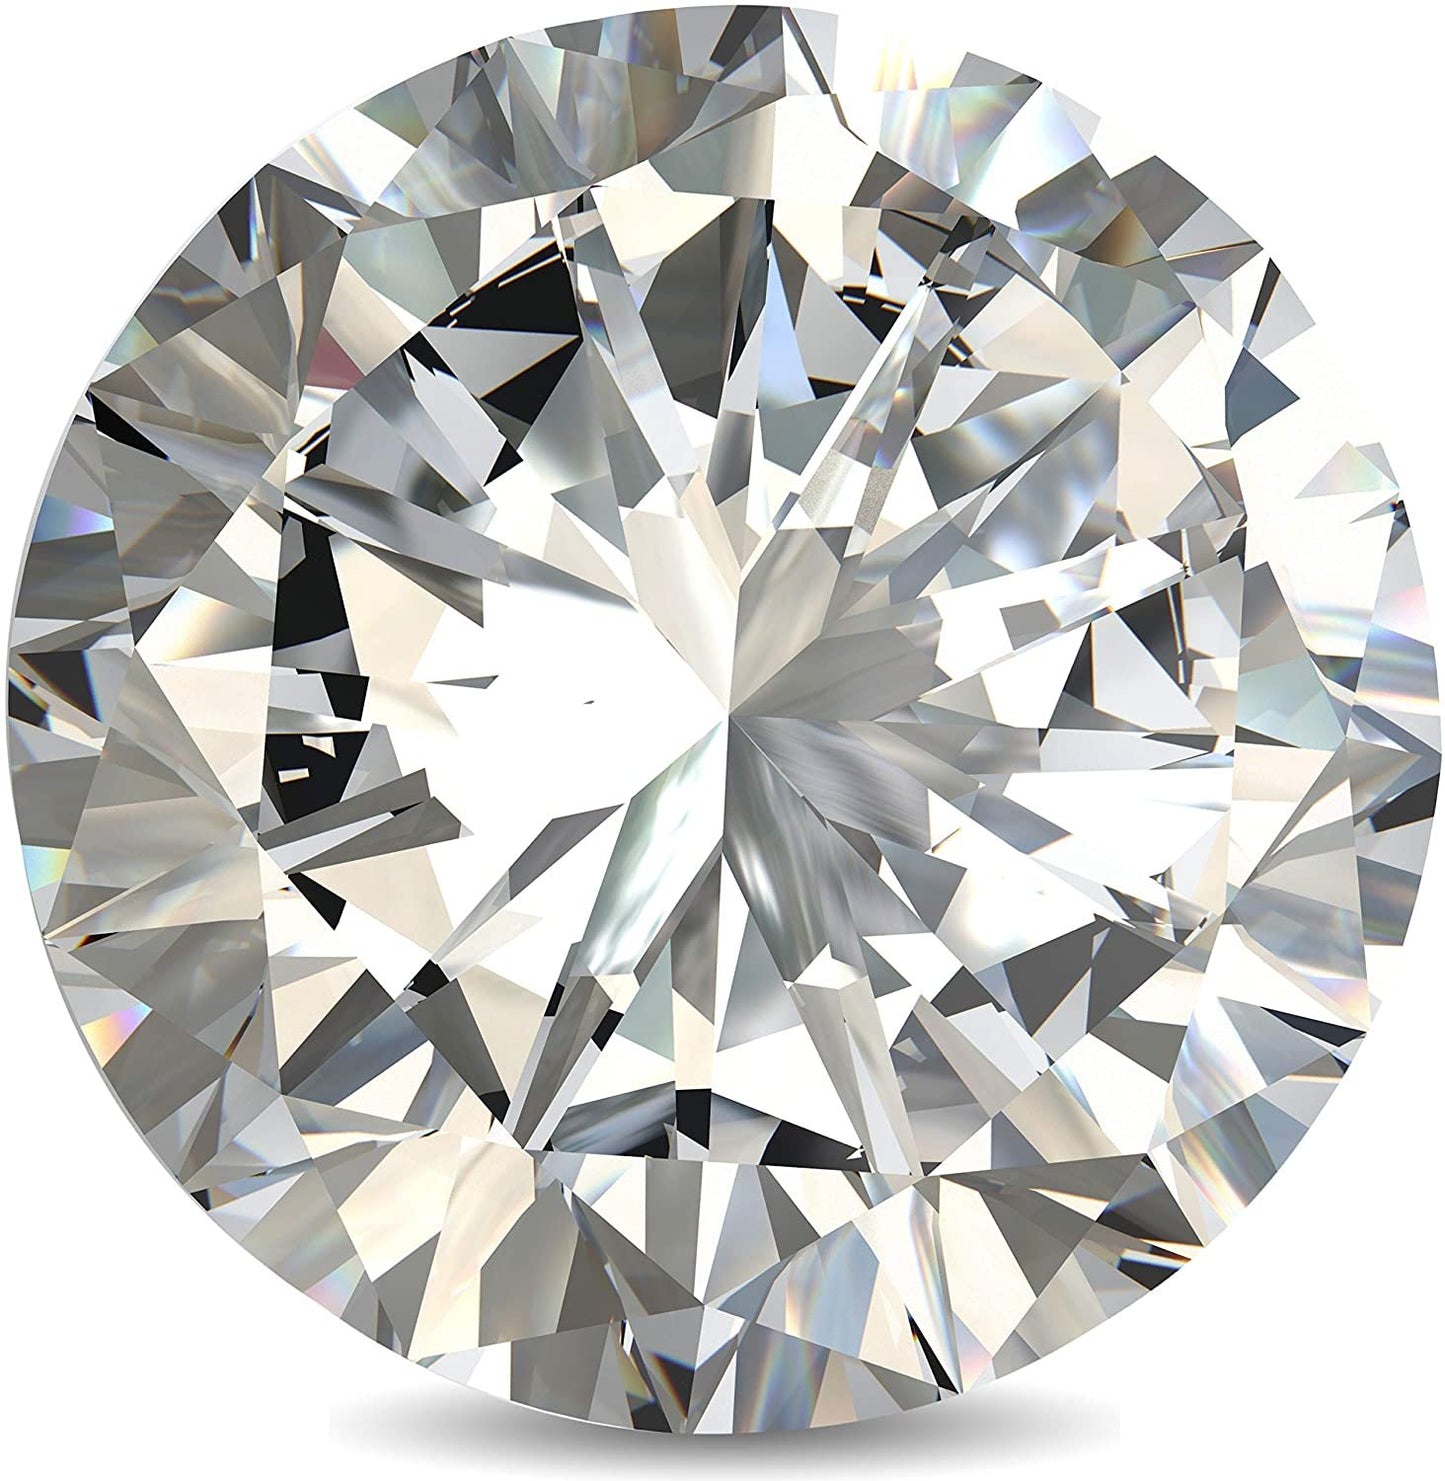 IGI Certified Loose 1/2 to 2.0 Carat Round Brilliant Cut Lab Created Diamond (E-F Color, VVS1-VVS2 Clarity) - Single Loose Stone